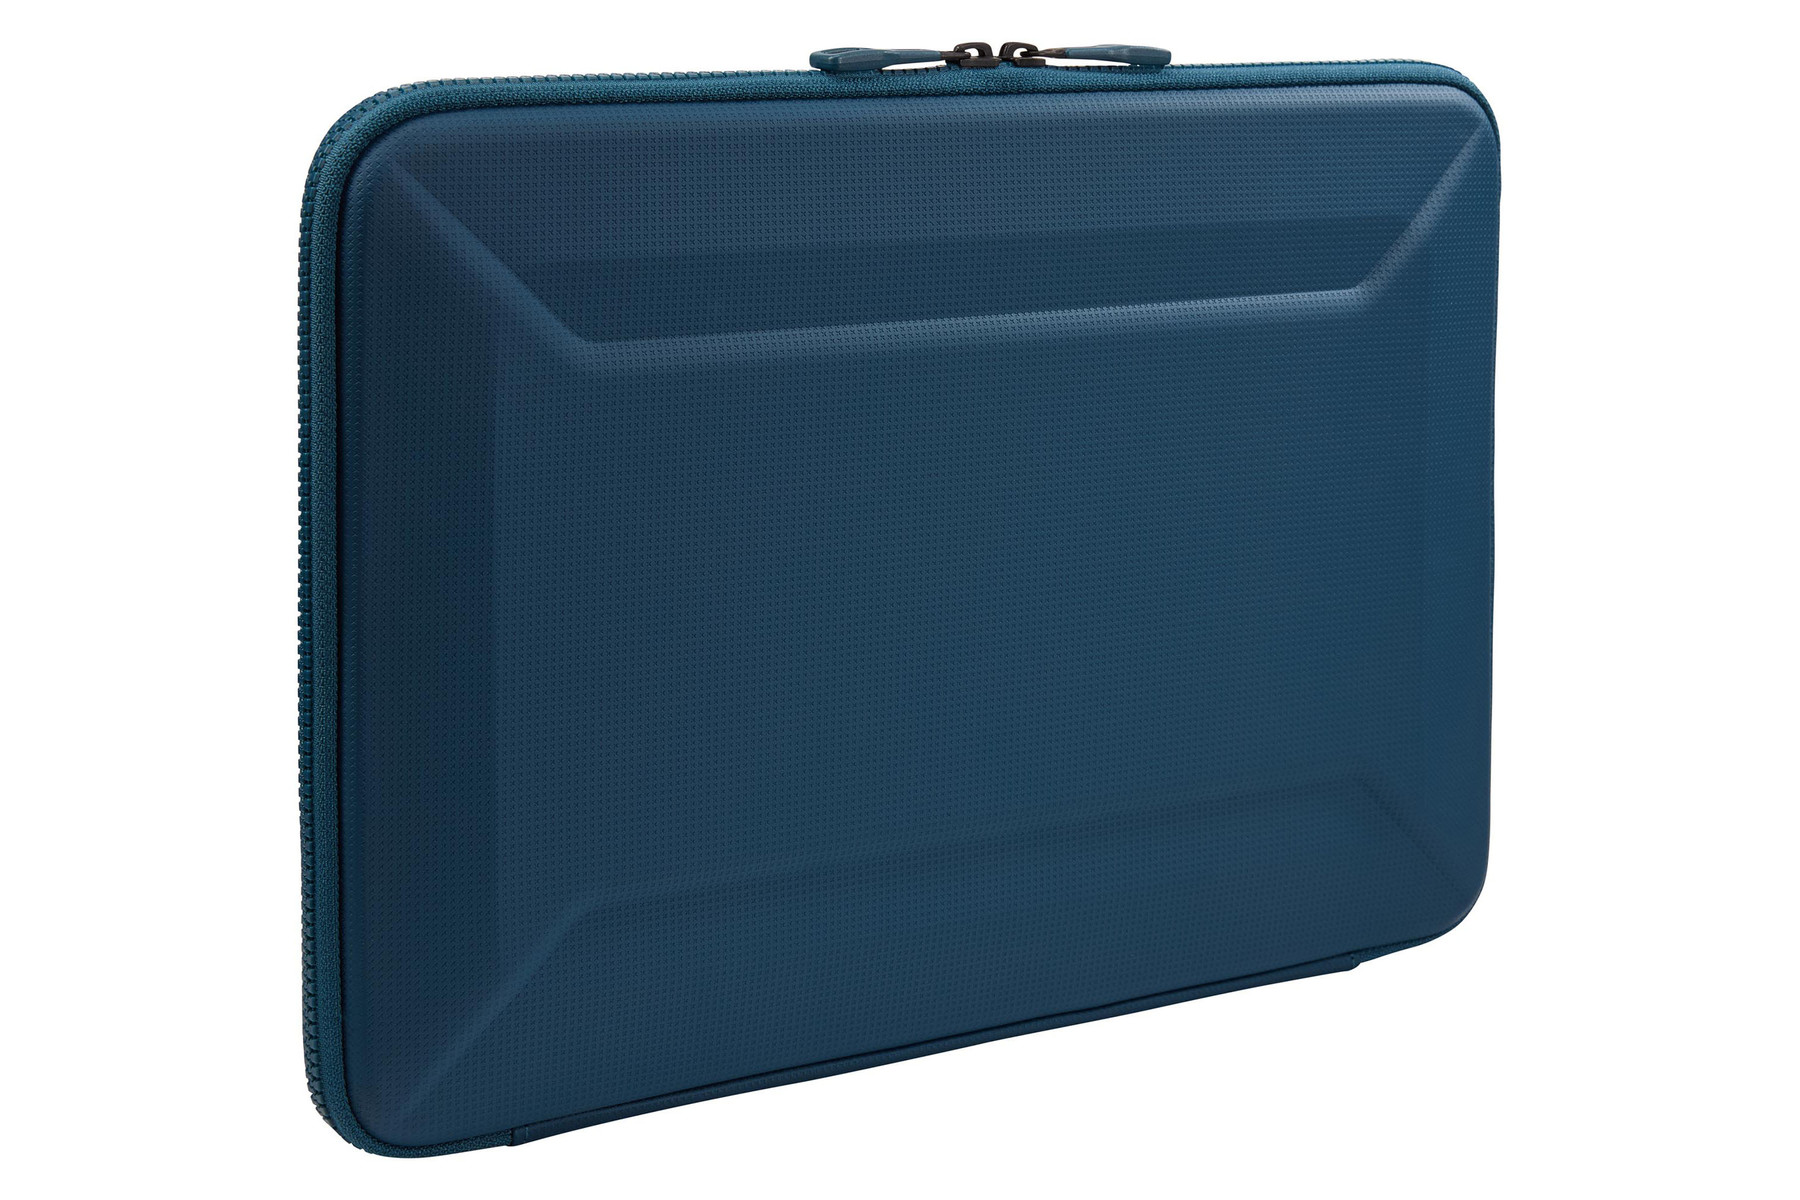 Чехол Thule 16-inch для MacBook Pro Gauntlet Sleeve Blue TGSE2357BLU / 3204524 серый рюкзак icon pack lite для macbook и пк 15 16 дюймов incase серый